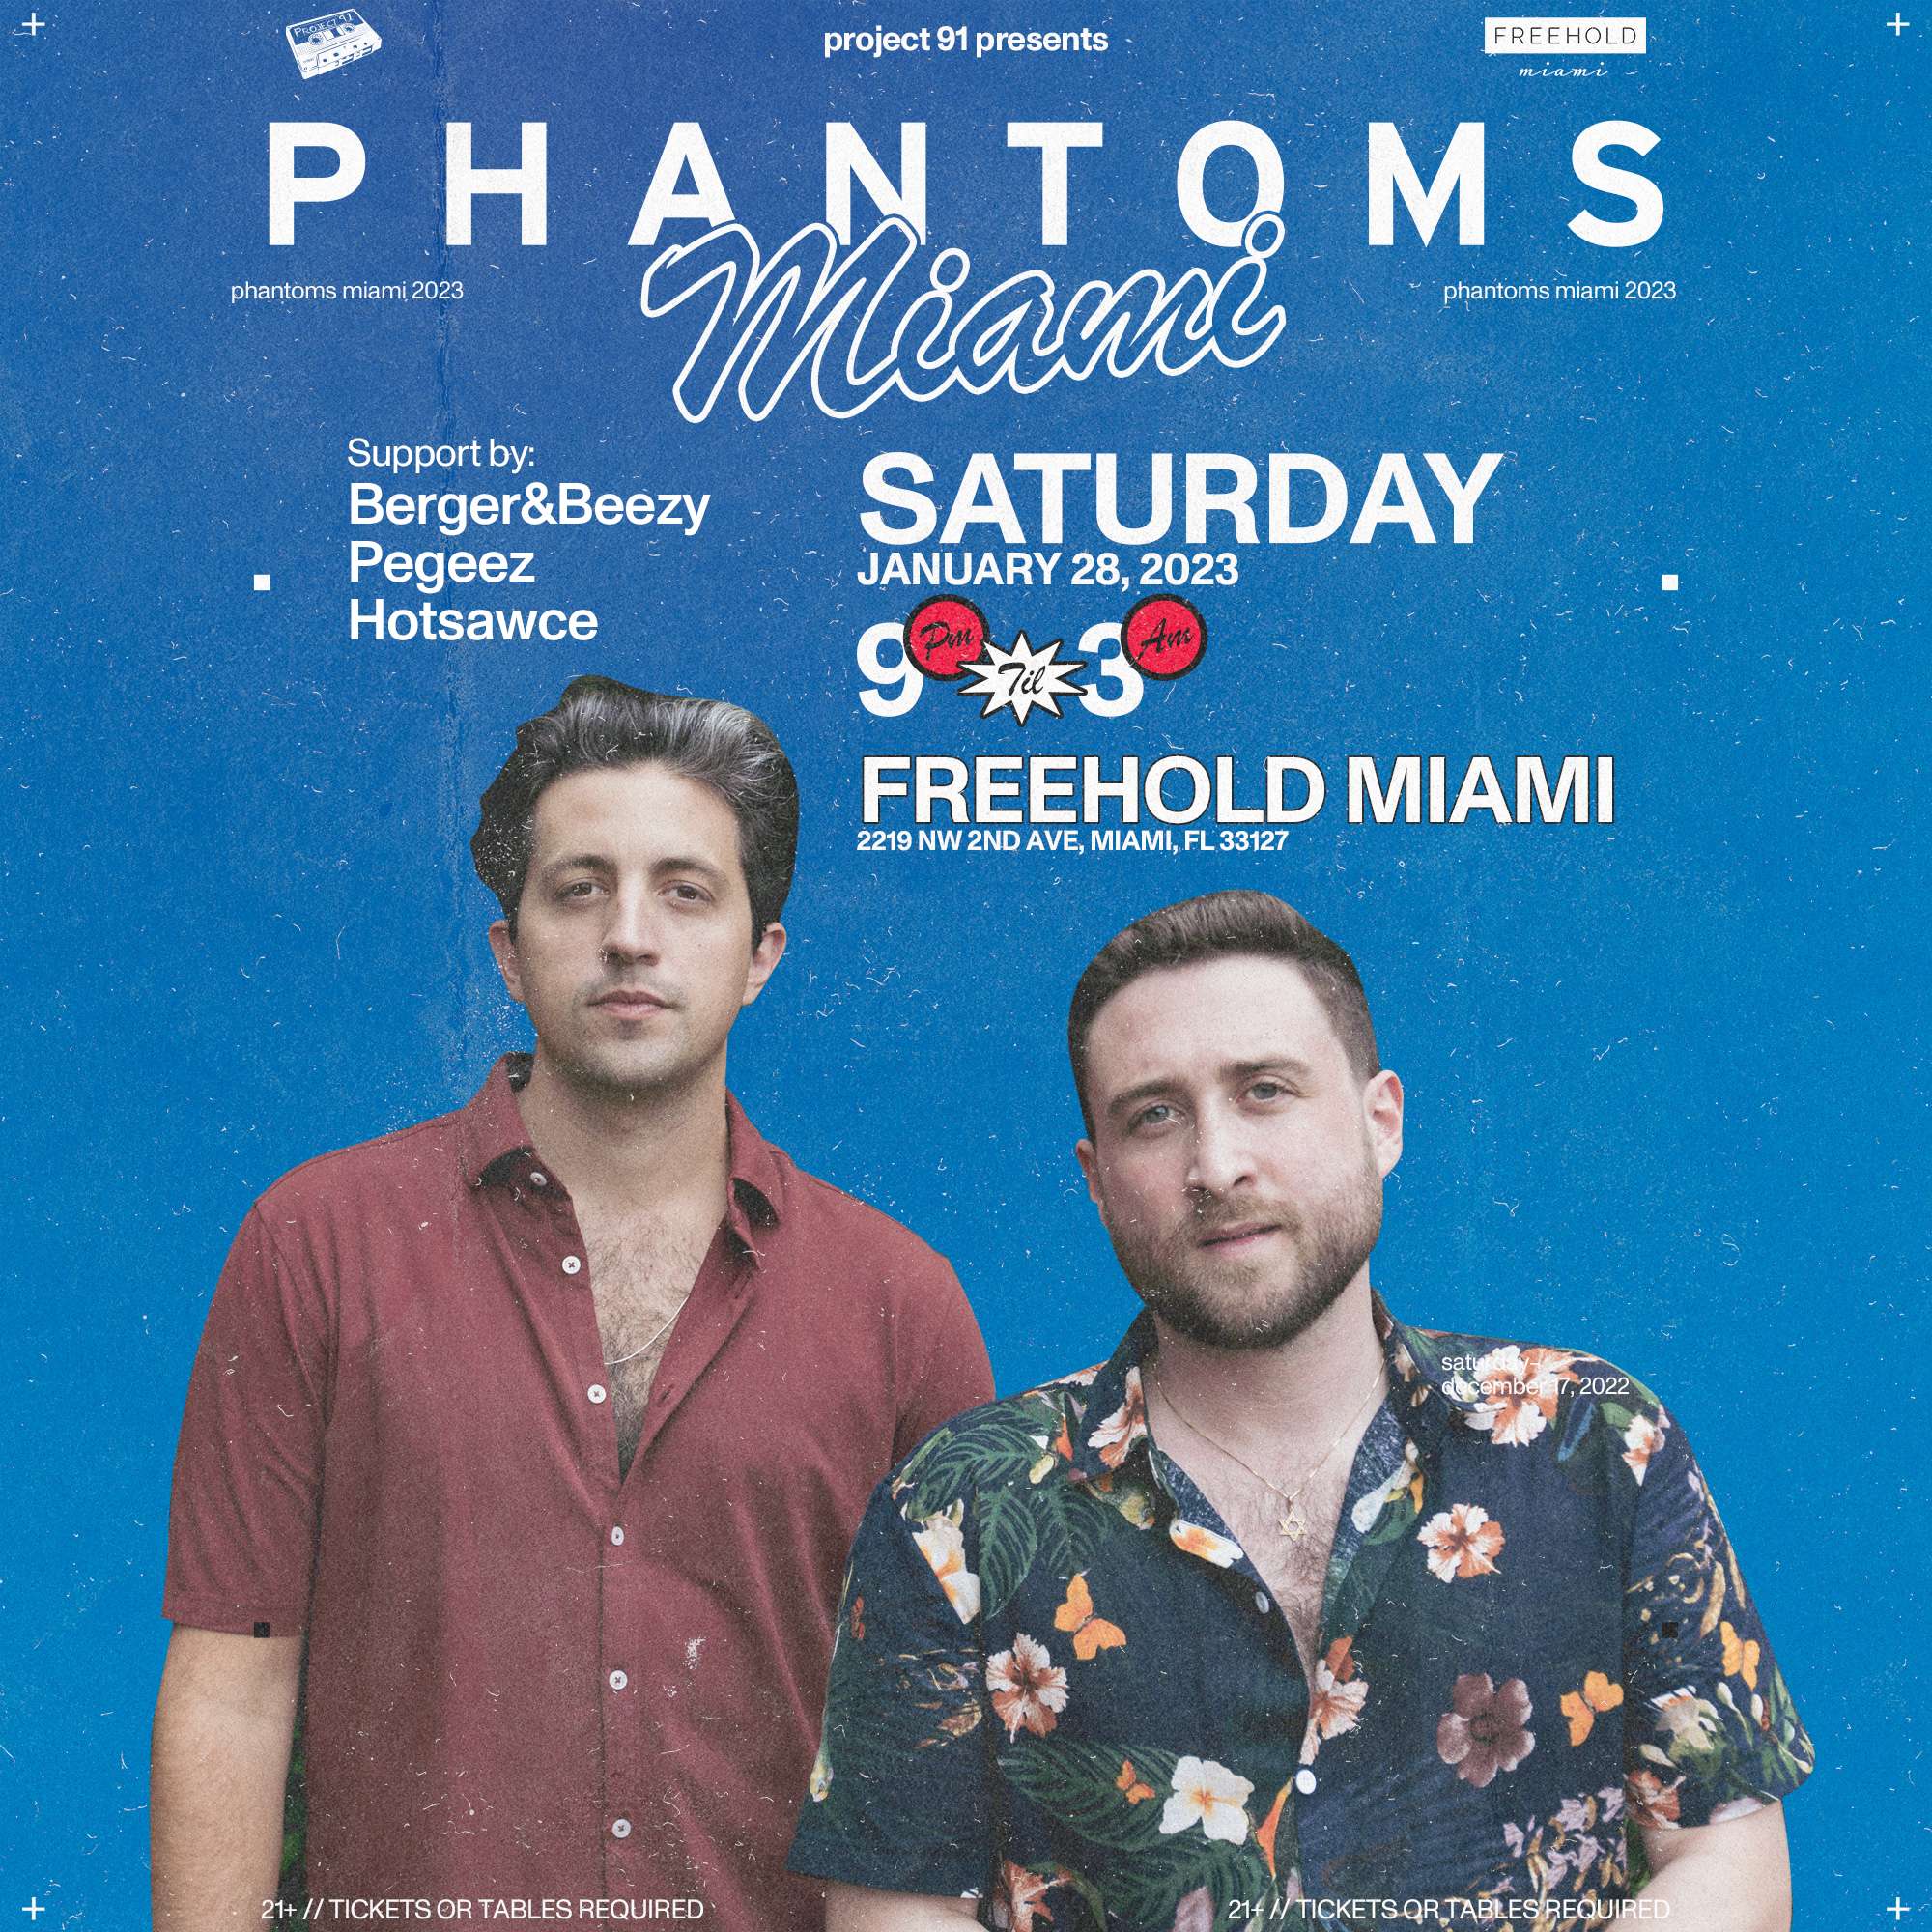 Lost Kings at LA V Nightclub Miami 4/30 – Tickets – LA V BRICKELL – Miami,  FL – April 30th, 2021